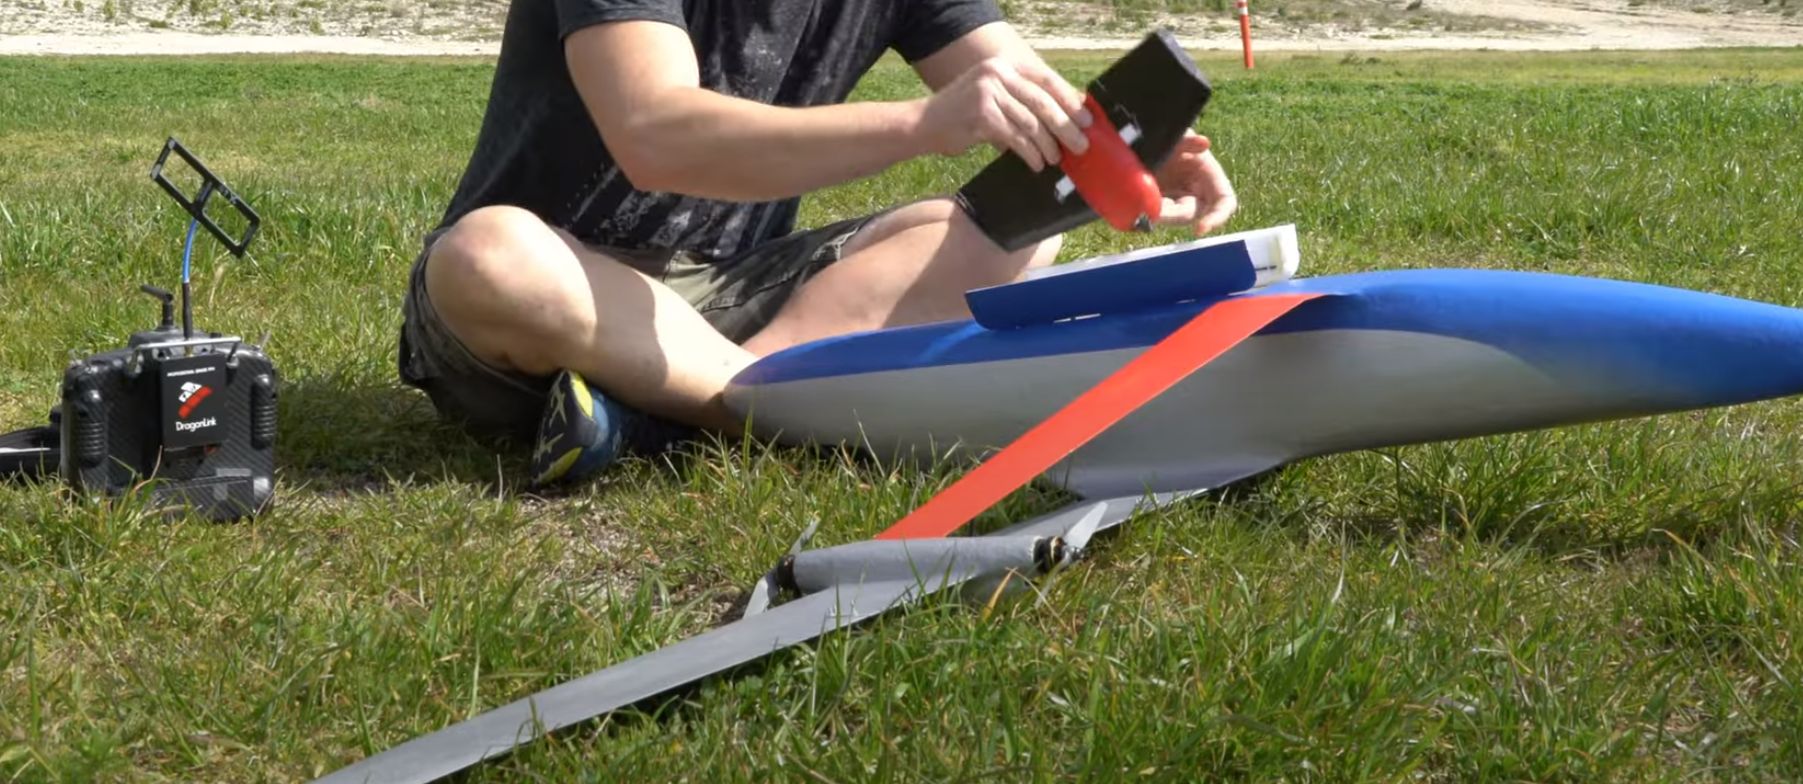 Membangun pesawat model dengan penyangga roda gigi: masuk akal atau tidak masuk akal?